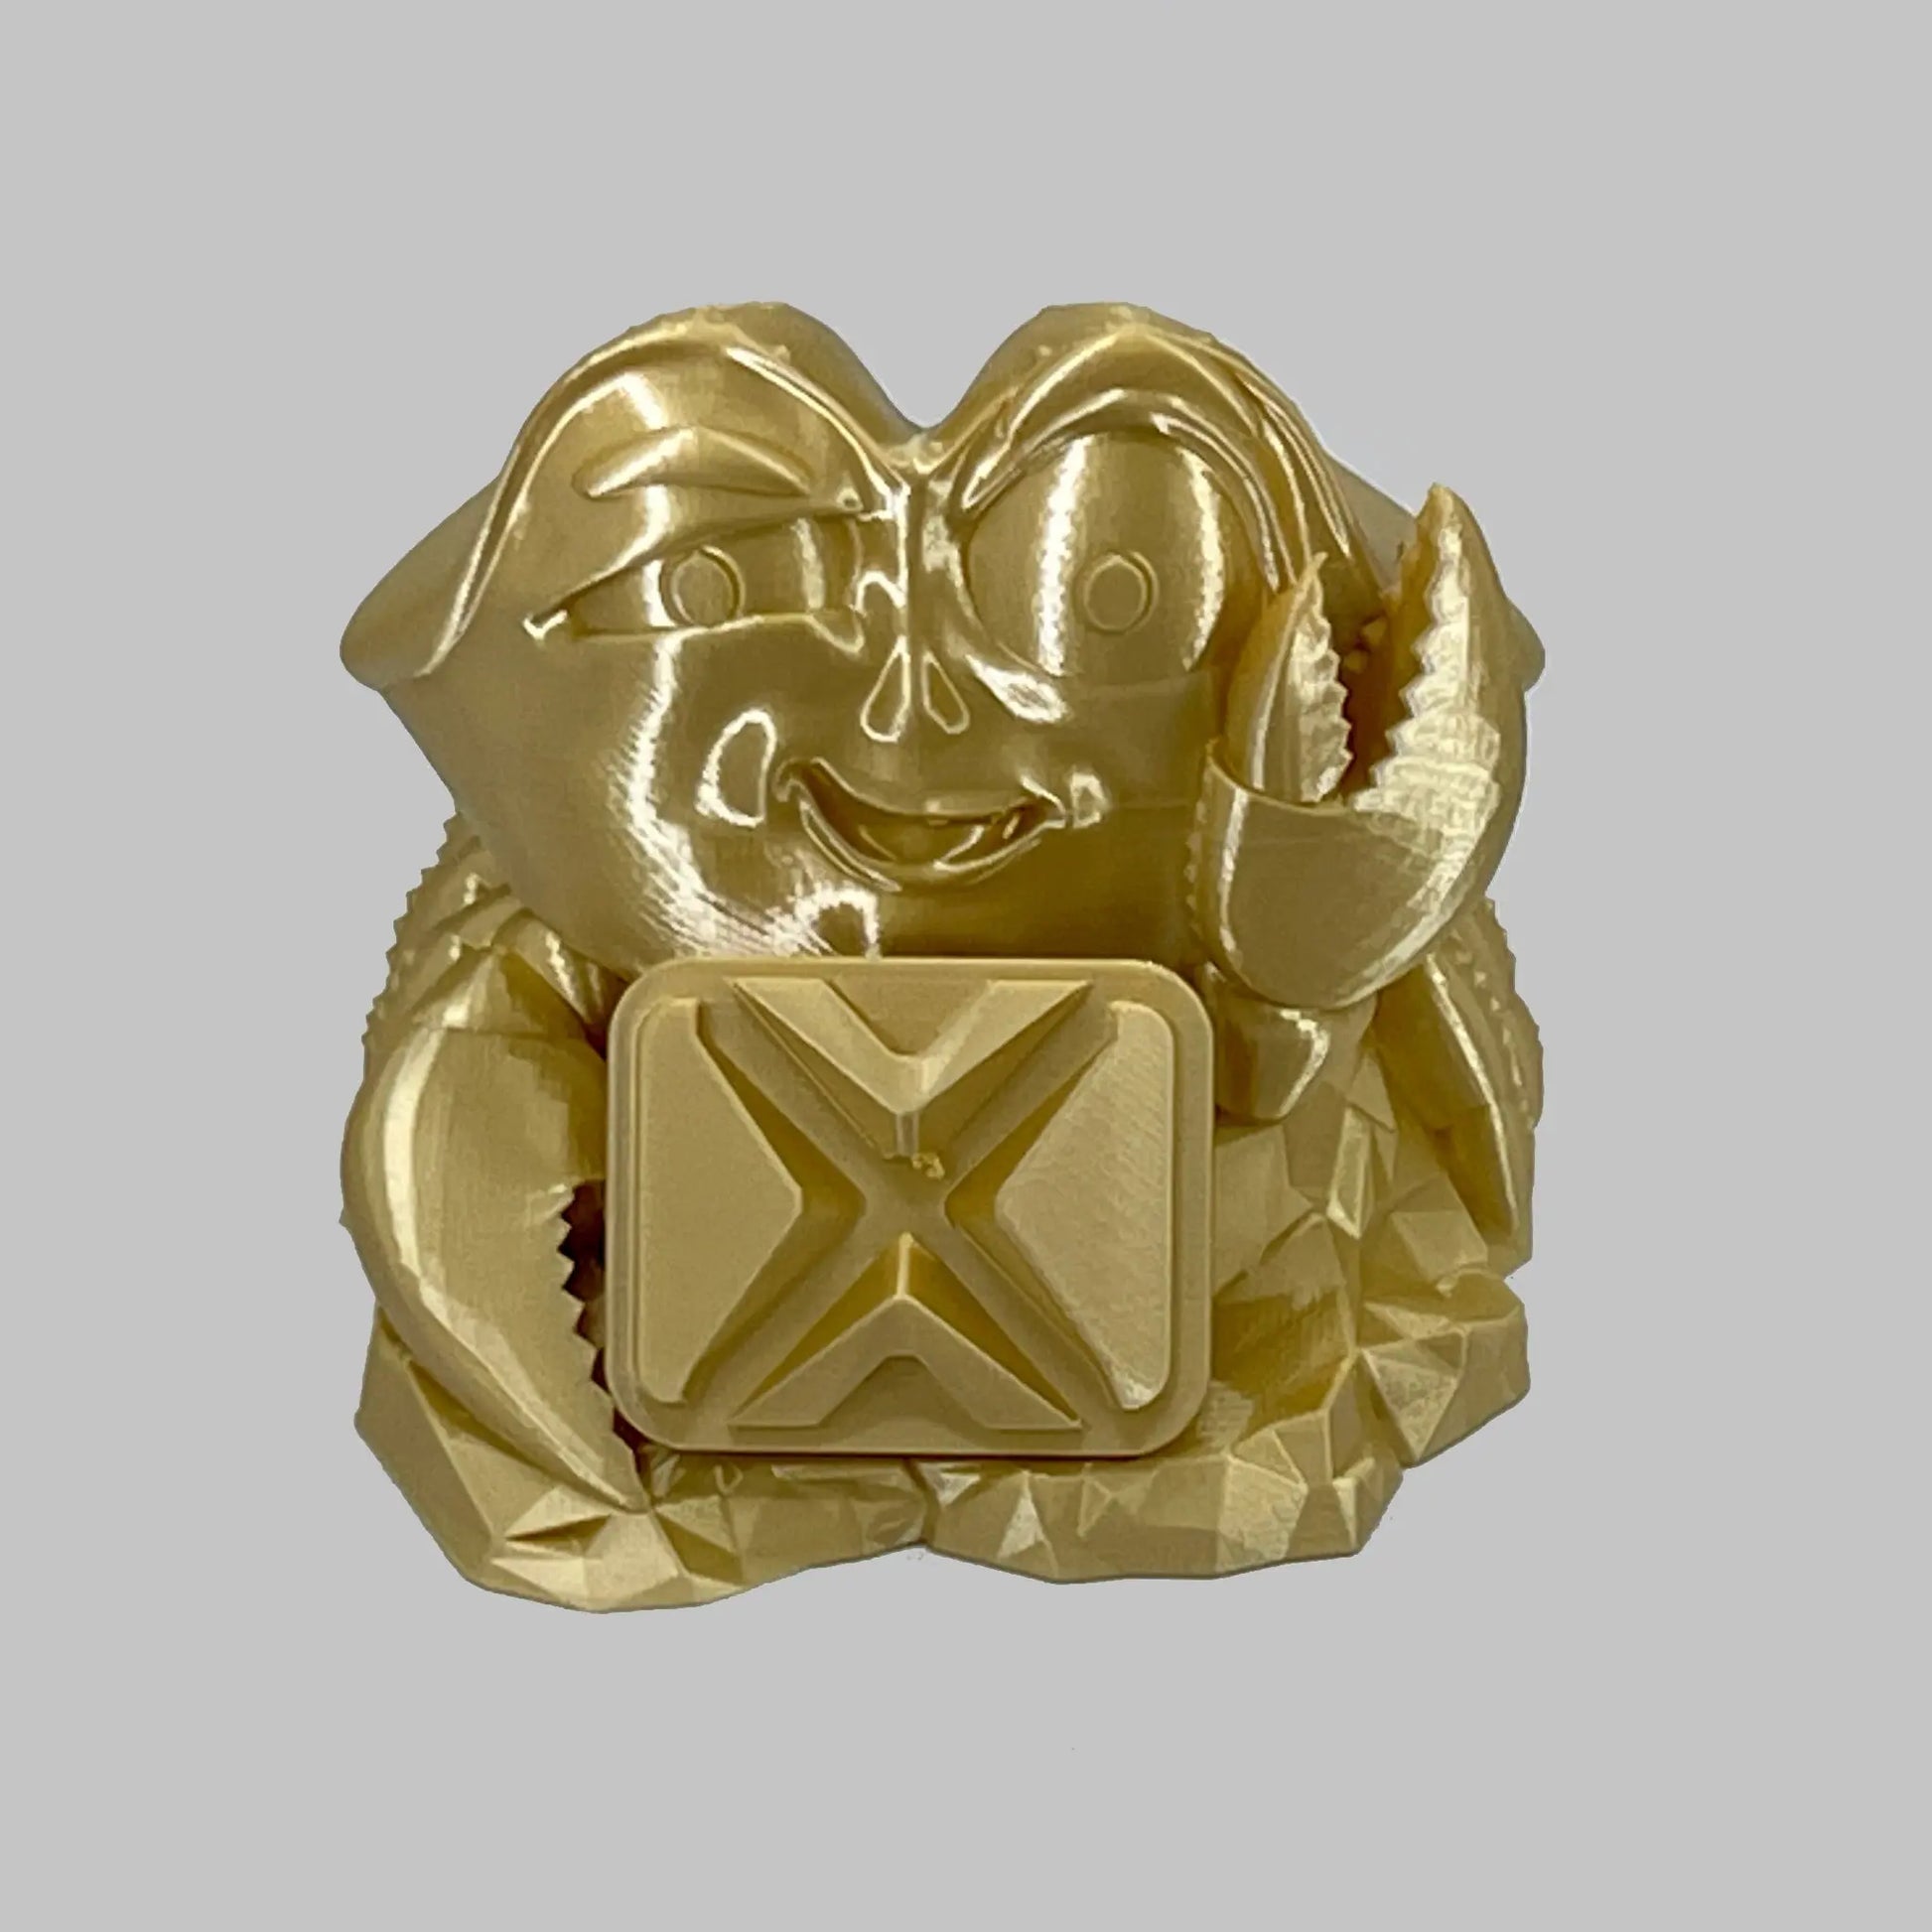 Gold PLA+Silk coex3d